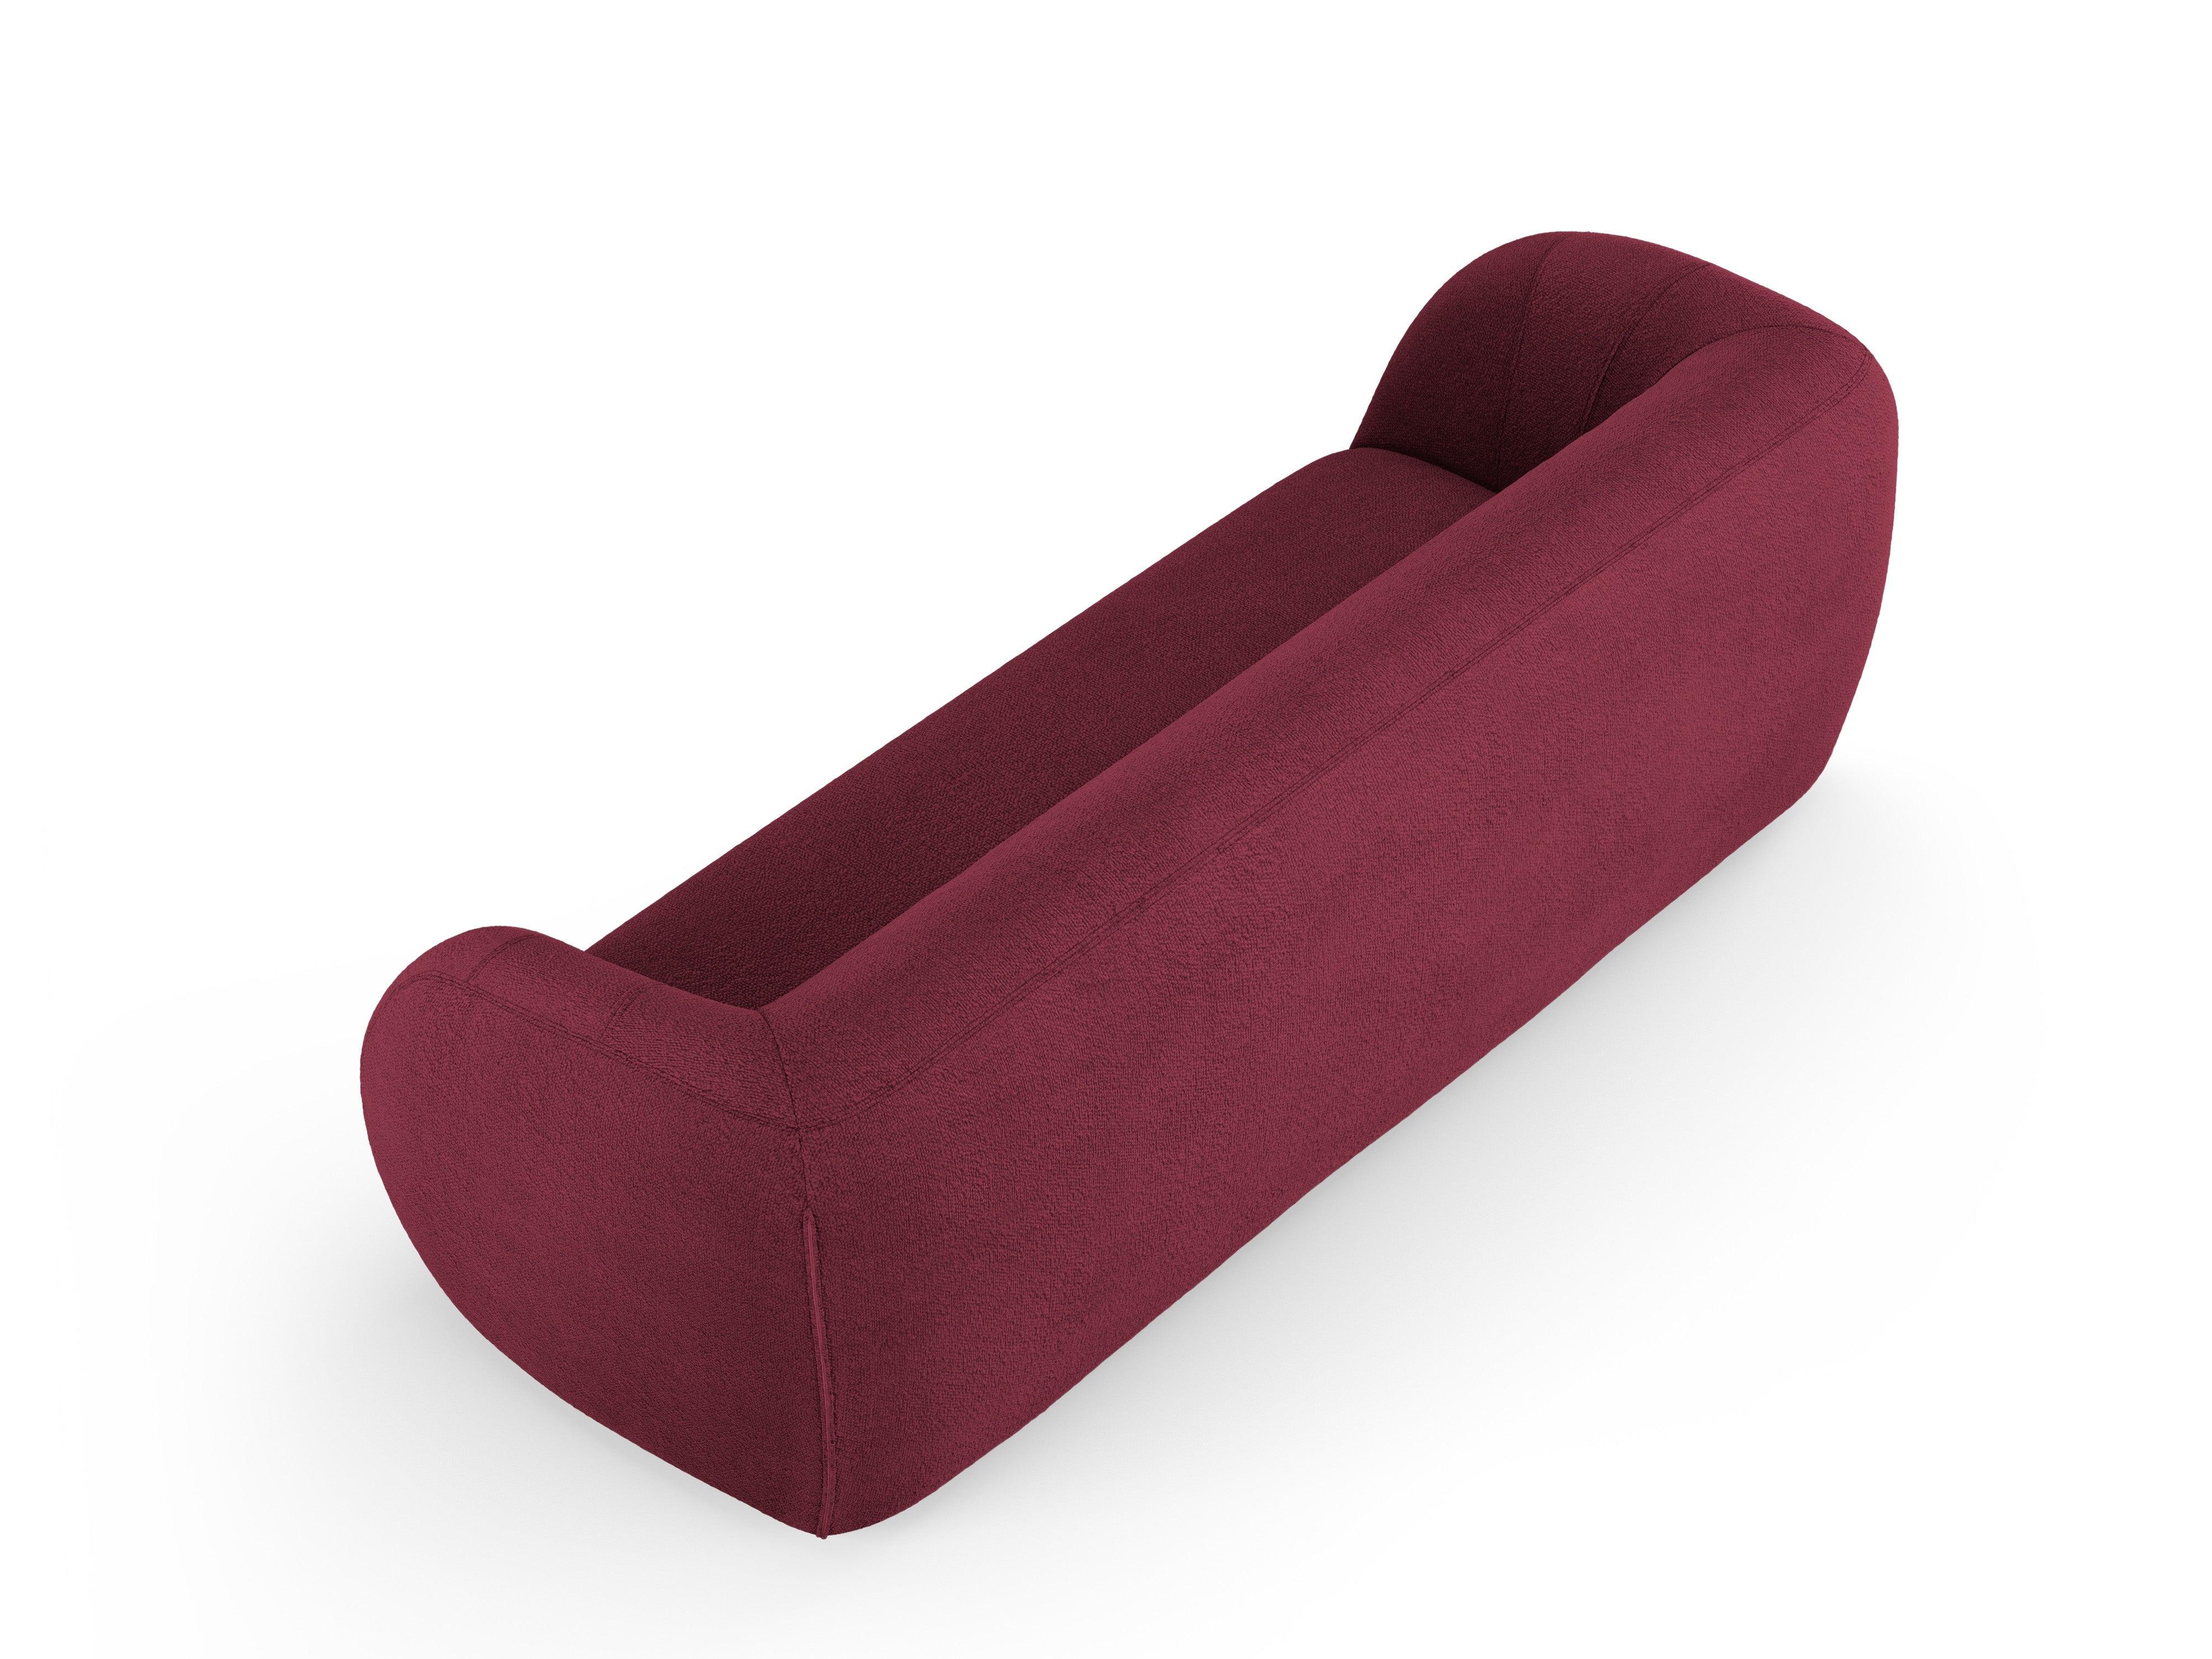 Sofa 3-osobowa ESSEN bordowy boucle Cosmopolitan Design    Eye on Design